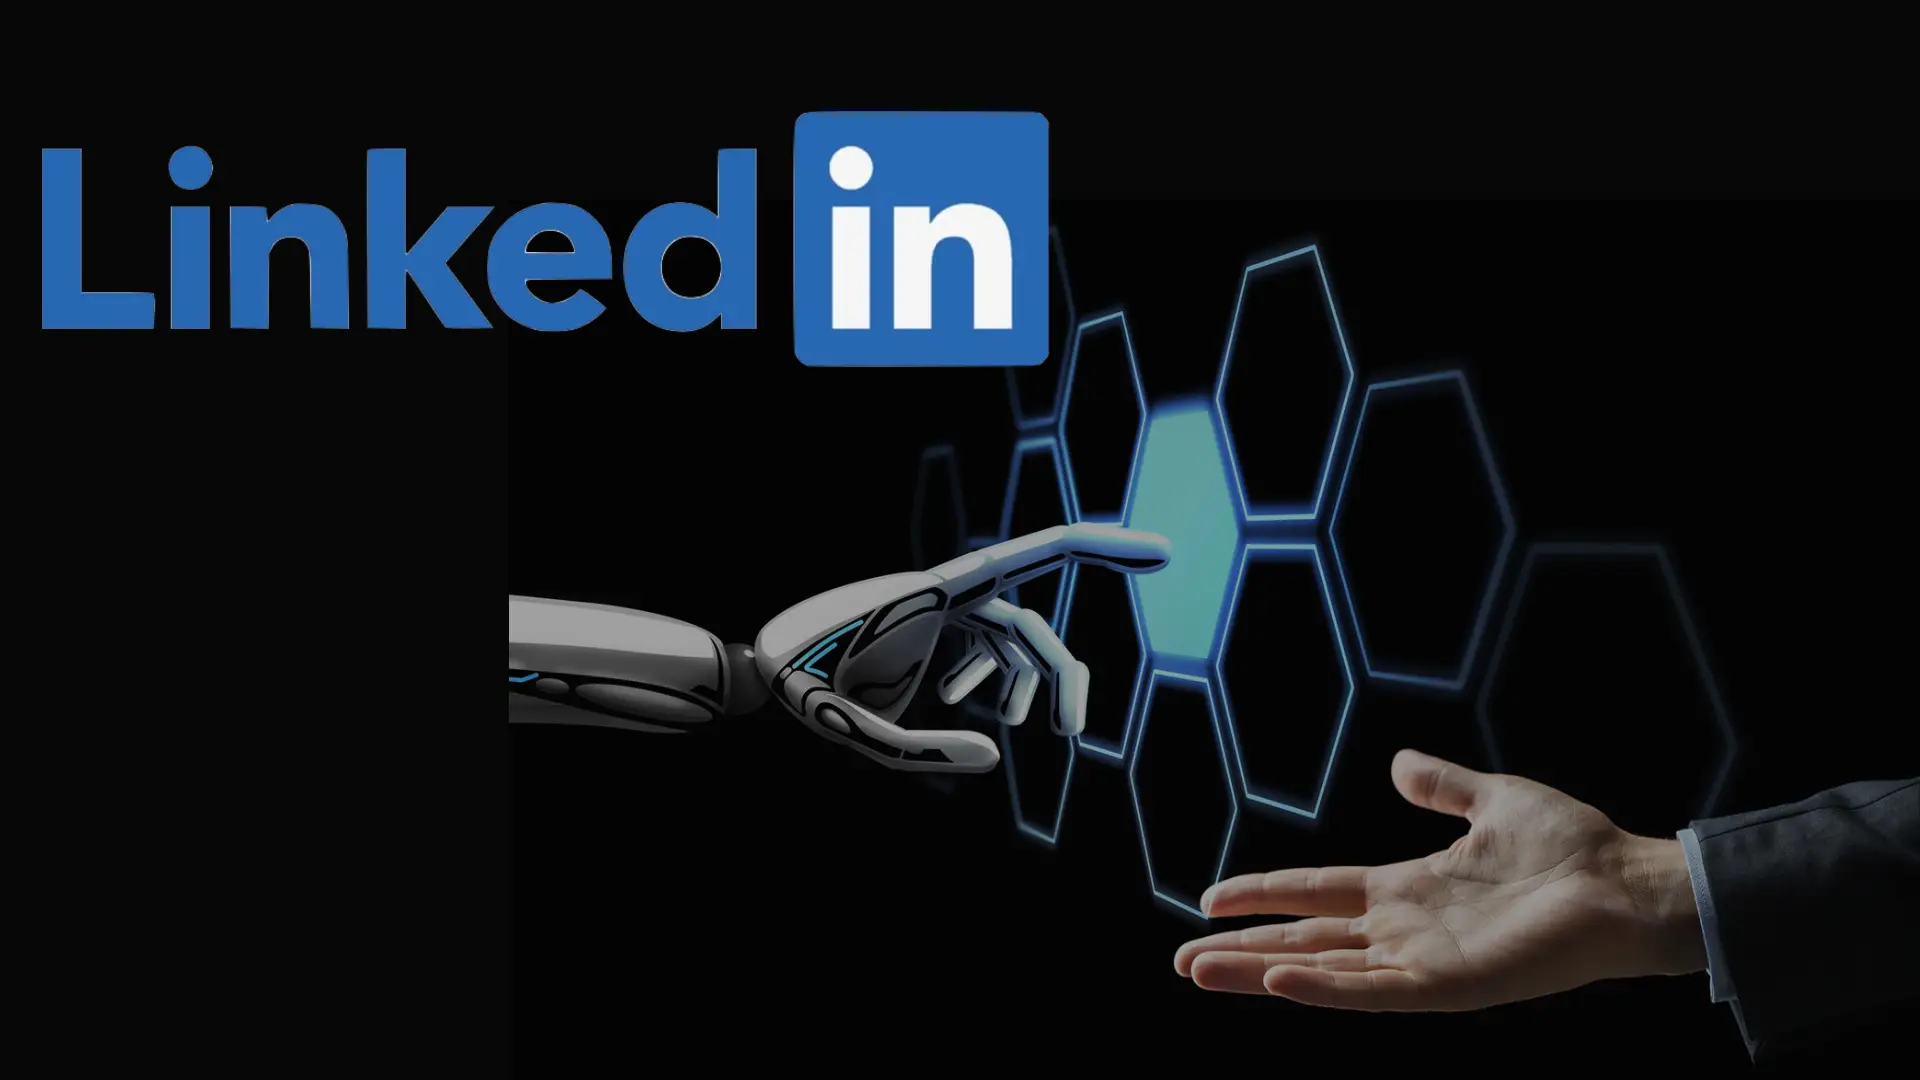 LinkedIn unveils new AI features